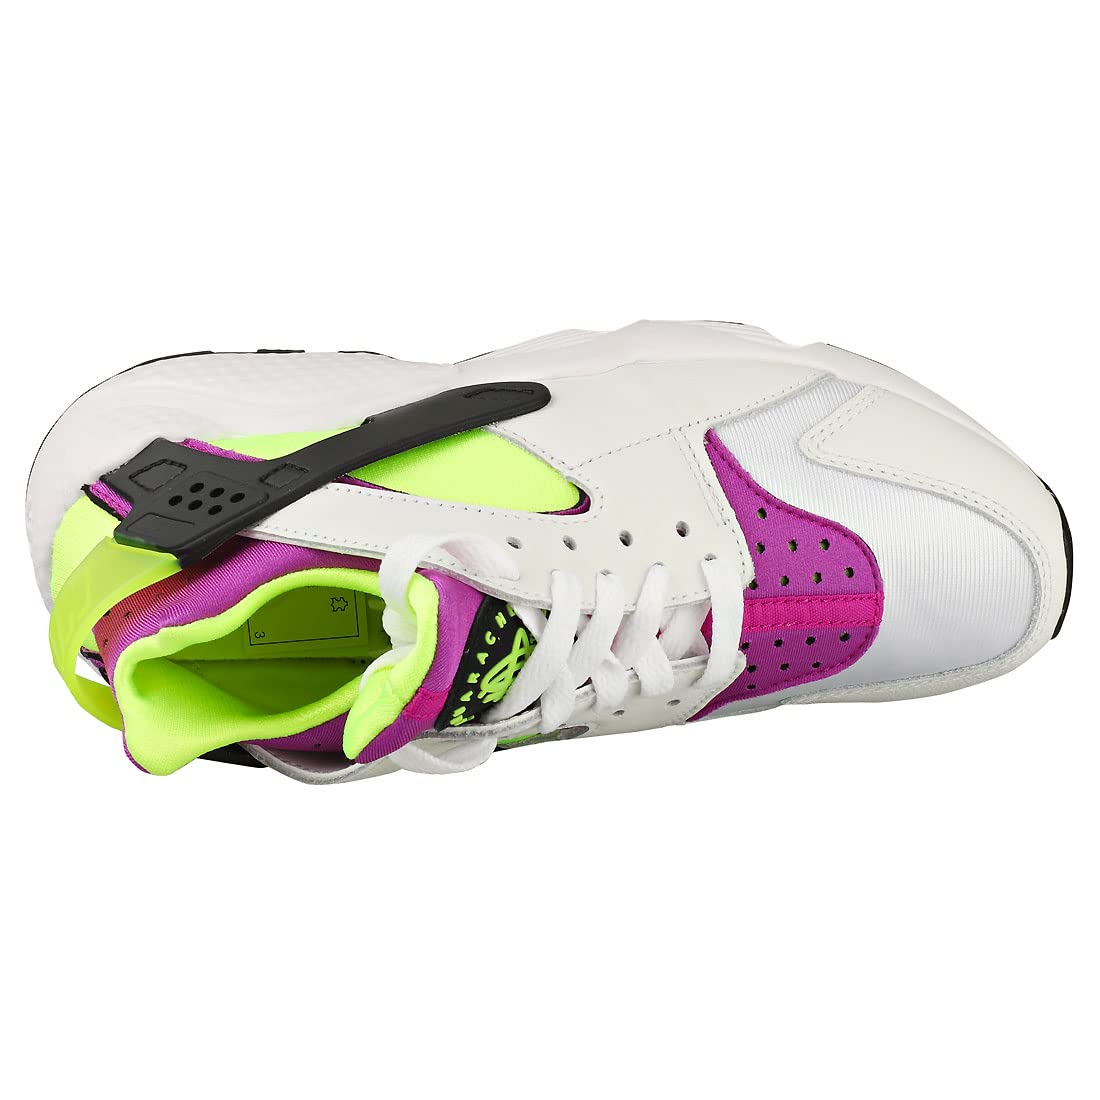 Nike womens Air Huarache Utility, White/Neon Yellow/Magenta, 8